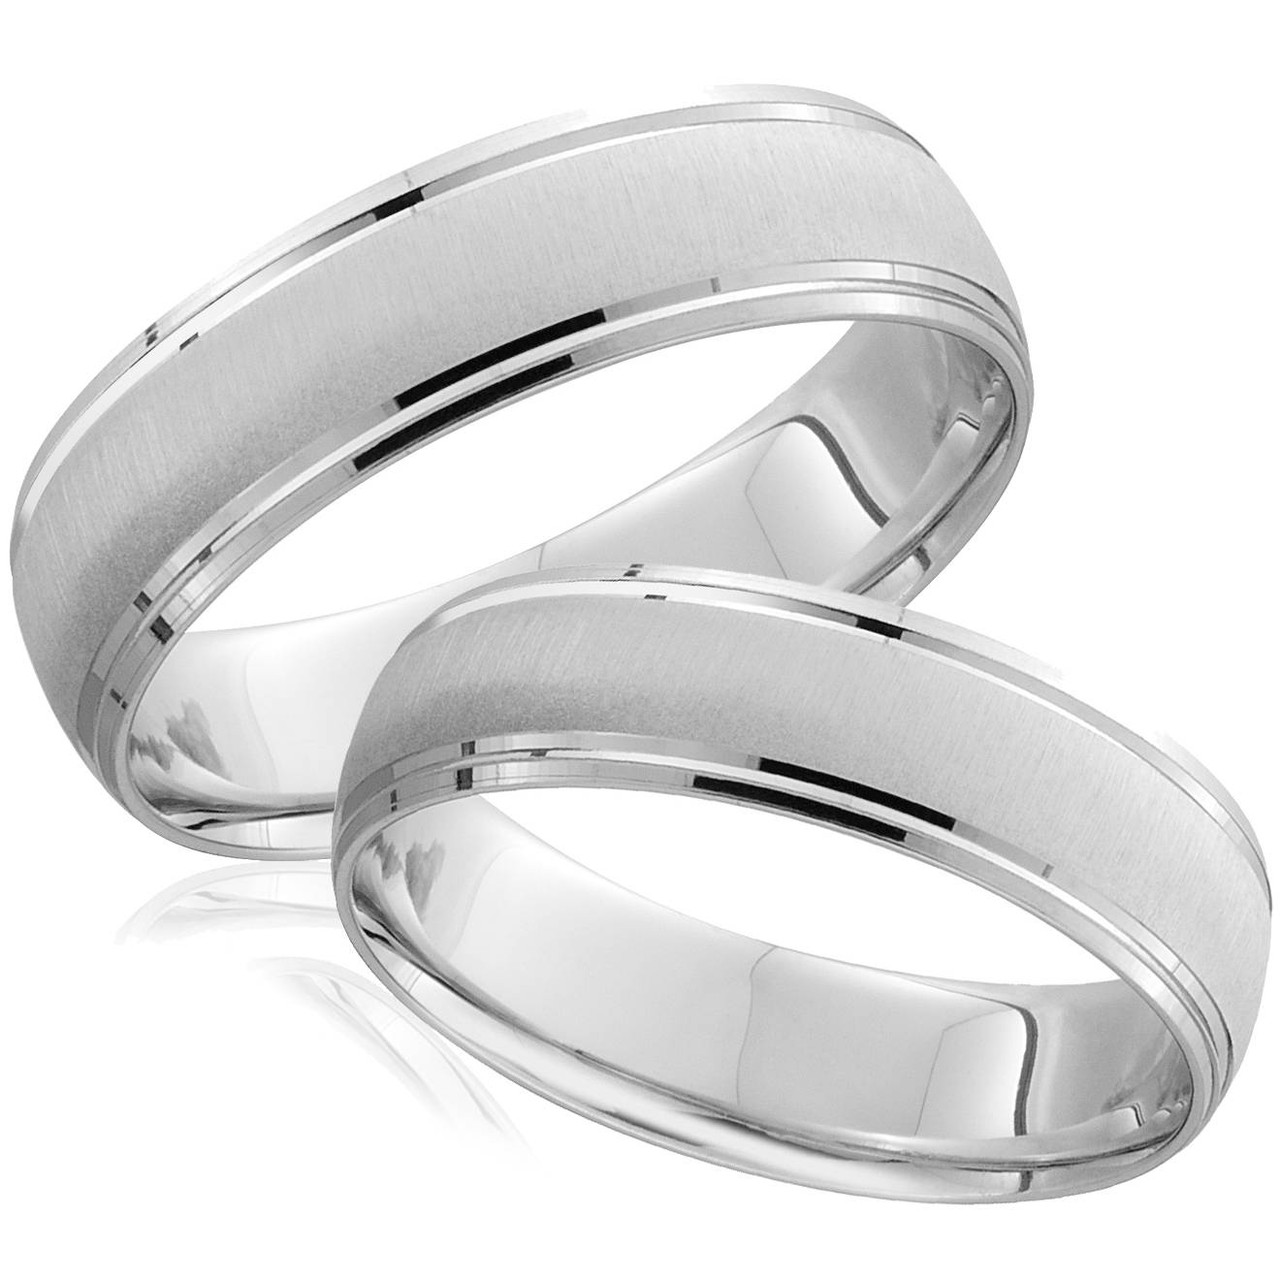 7 Pcs Gold Midi Ring Set, Gold Knuckle Rings Set for Women Girls,  Gold/silver Rings, Snake Chain Stacking Ring Boho Rings, Adjustable Rings -  Etsy